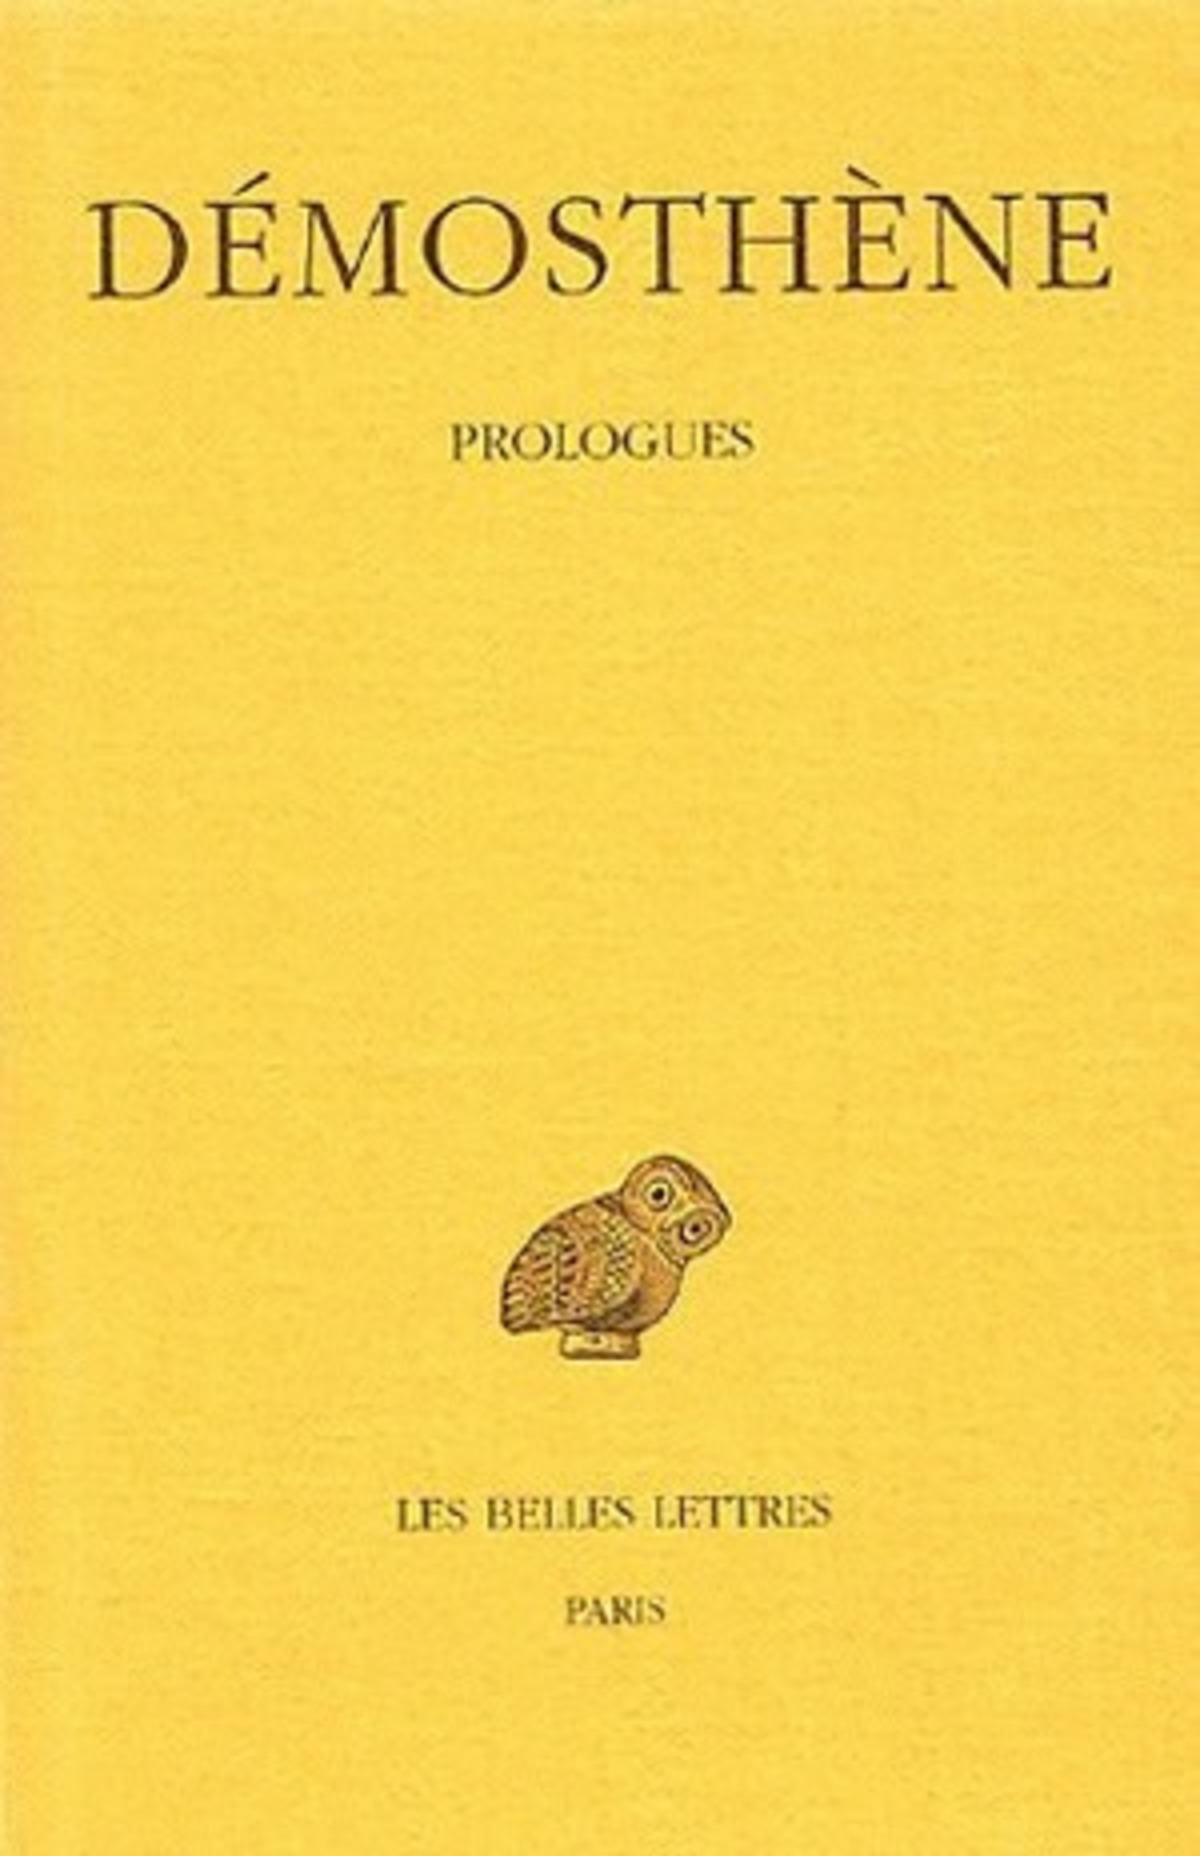 Prologues